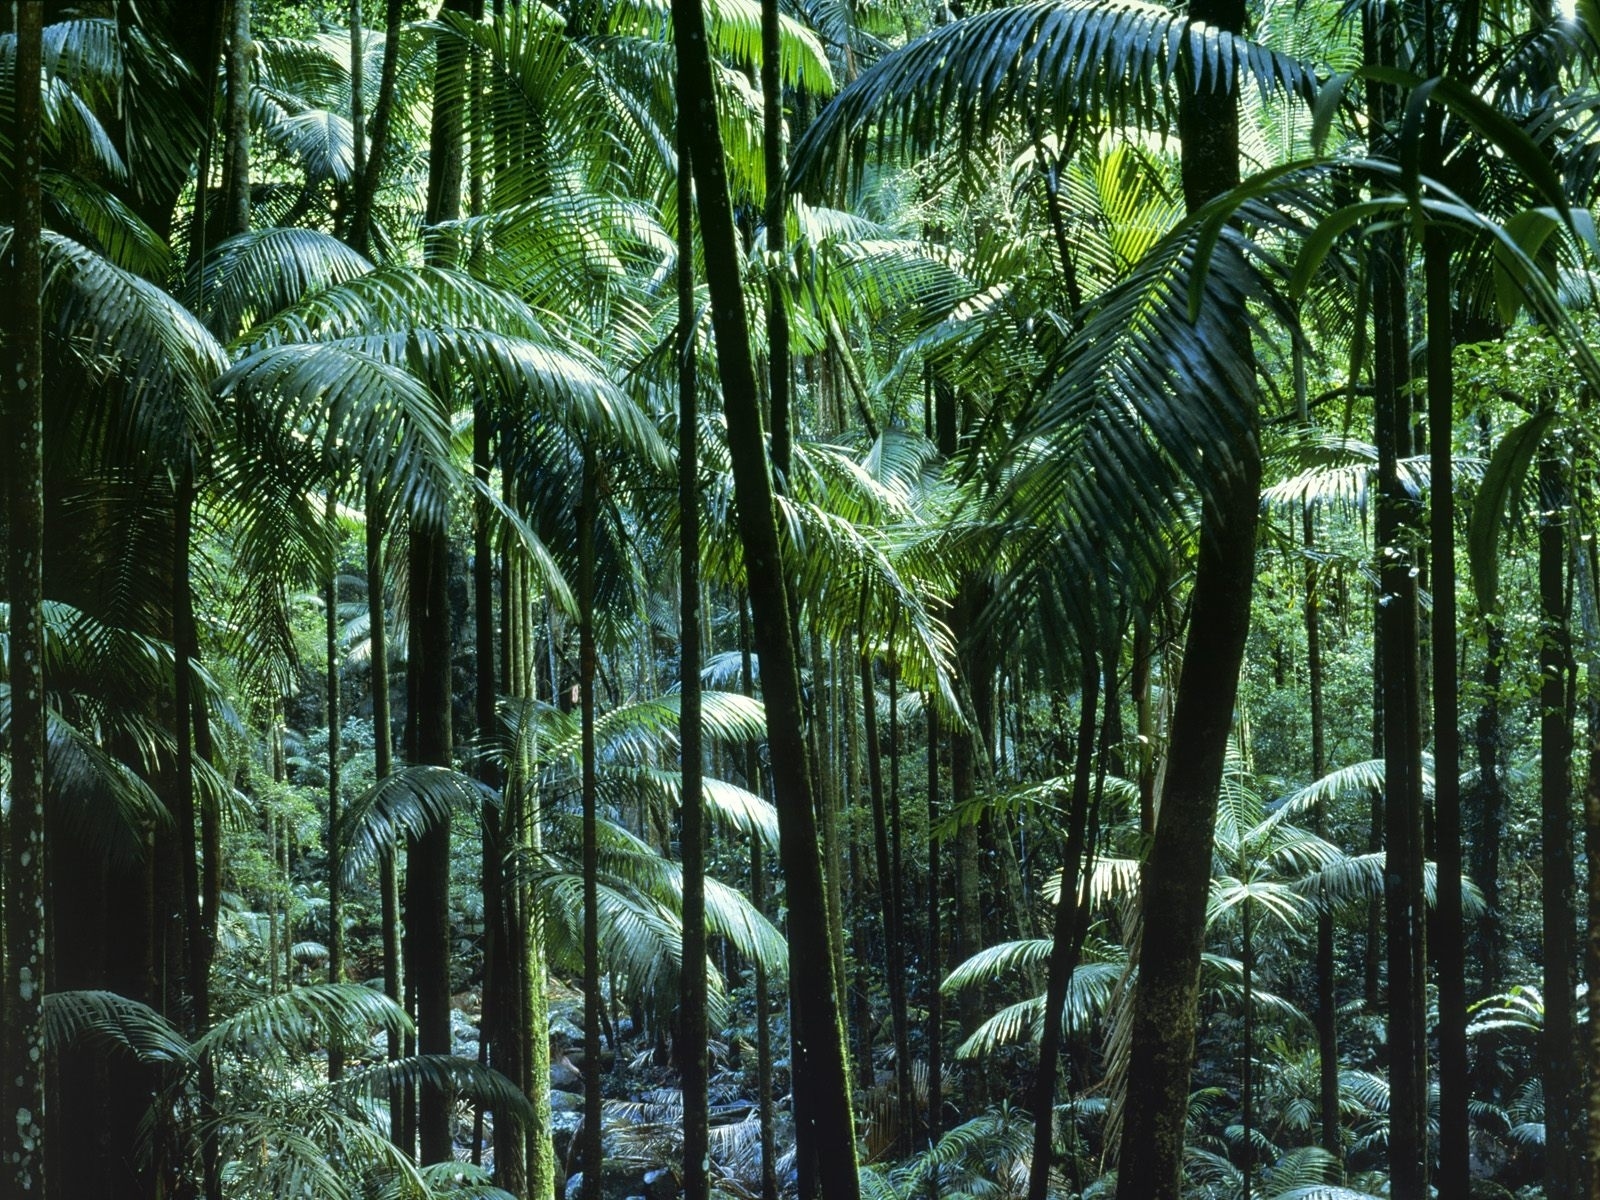 872178 descargar imagen tierra/naturaleza, jungla, bosque, verde, naturaleza, árbol, vegetación: fondos de pantalla y protectores de pantalla gratis